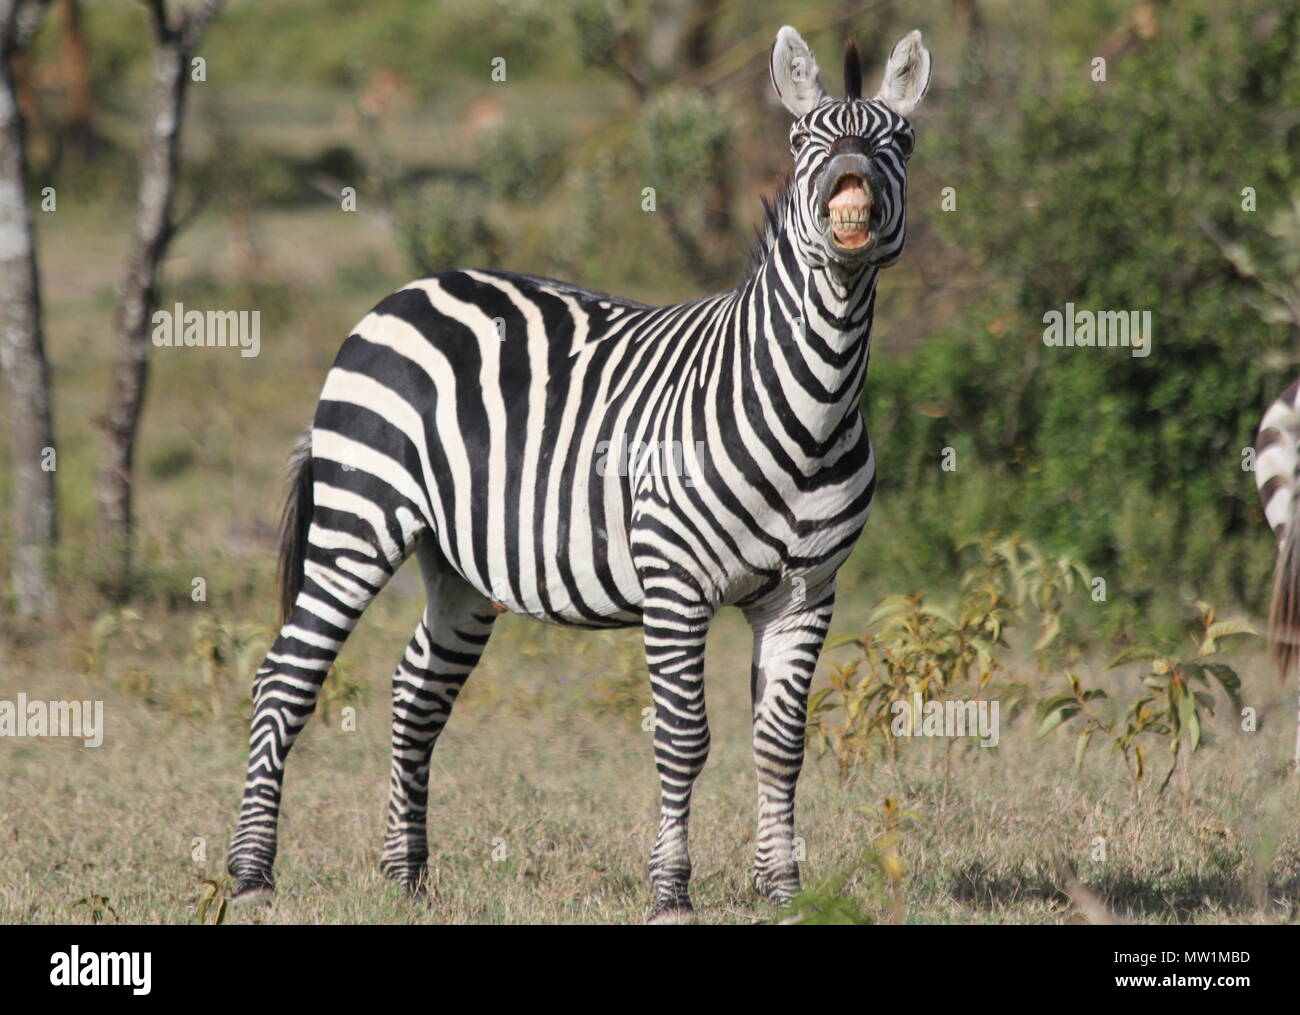 Zebra showing his teeth Stock Photo